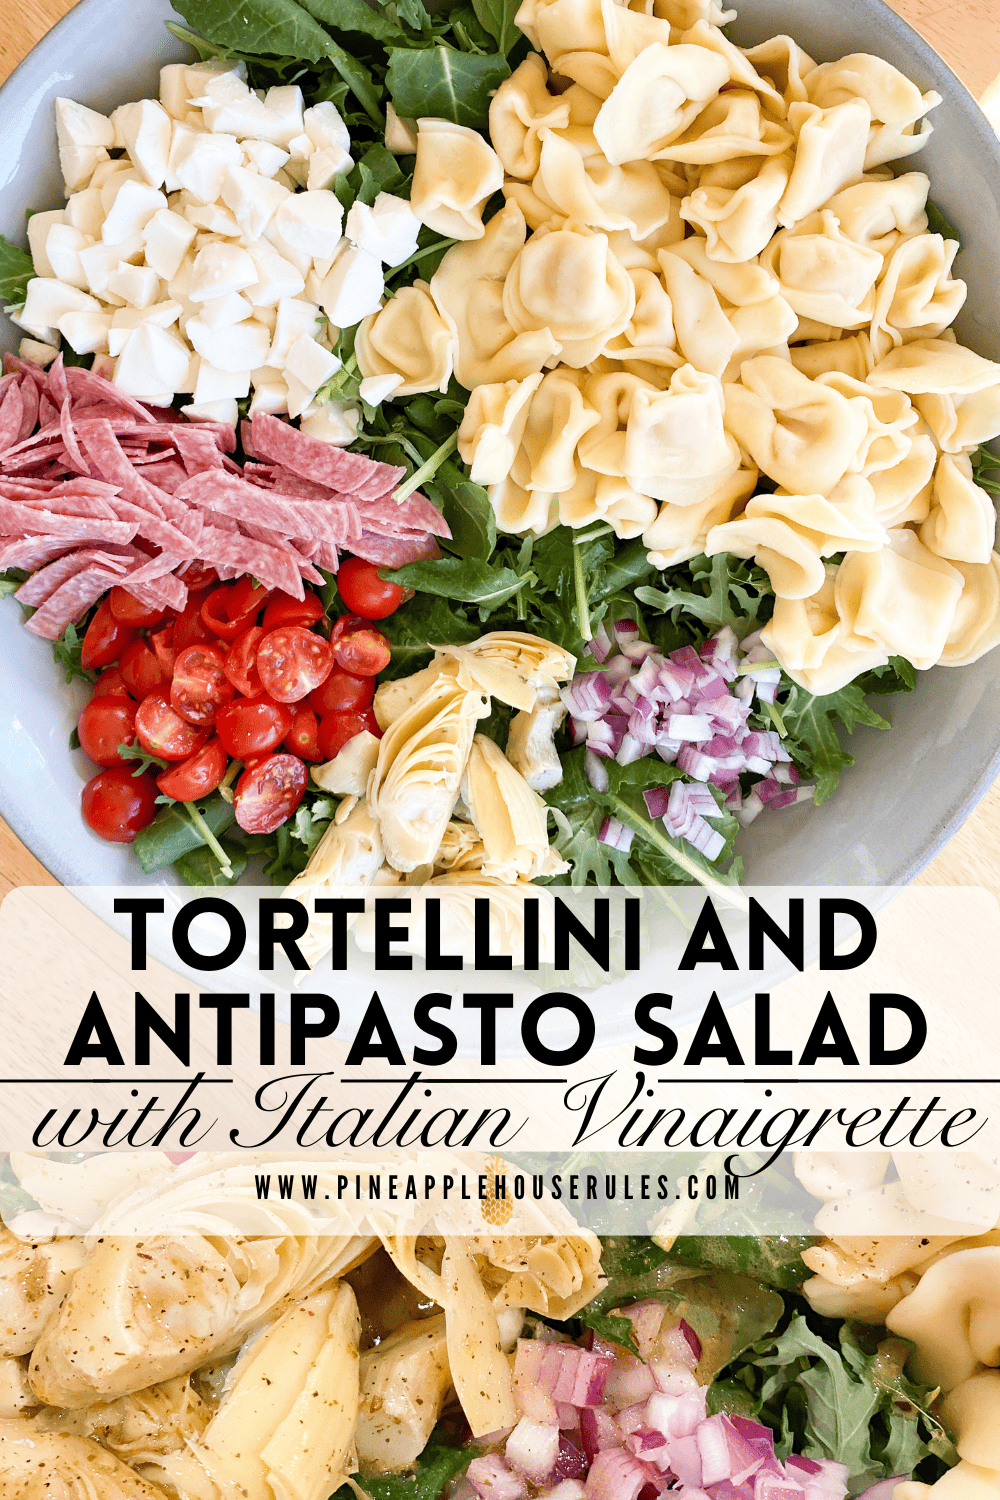 Tortellini and Antipasto Salad with Italian Vinaigrette